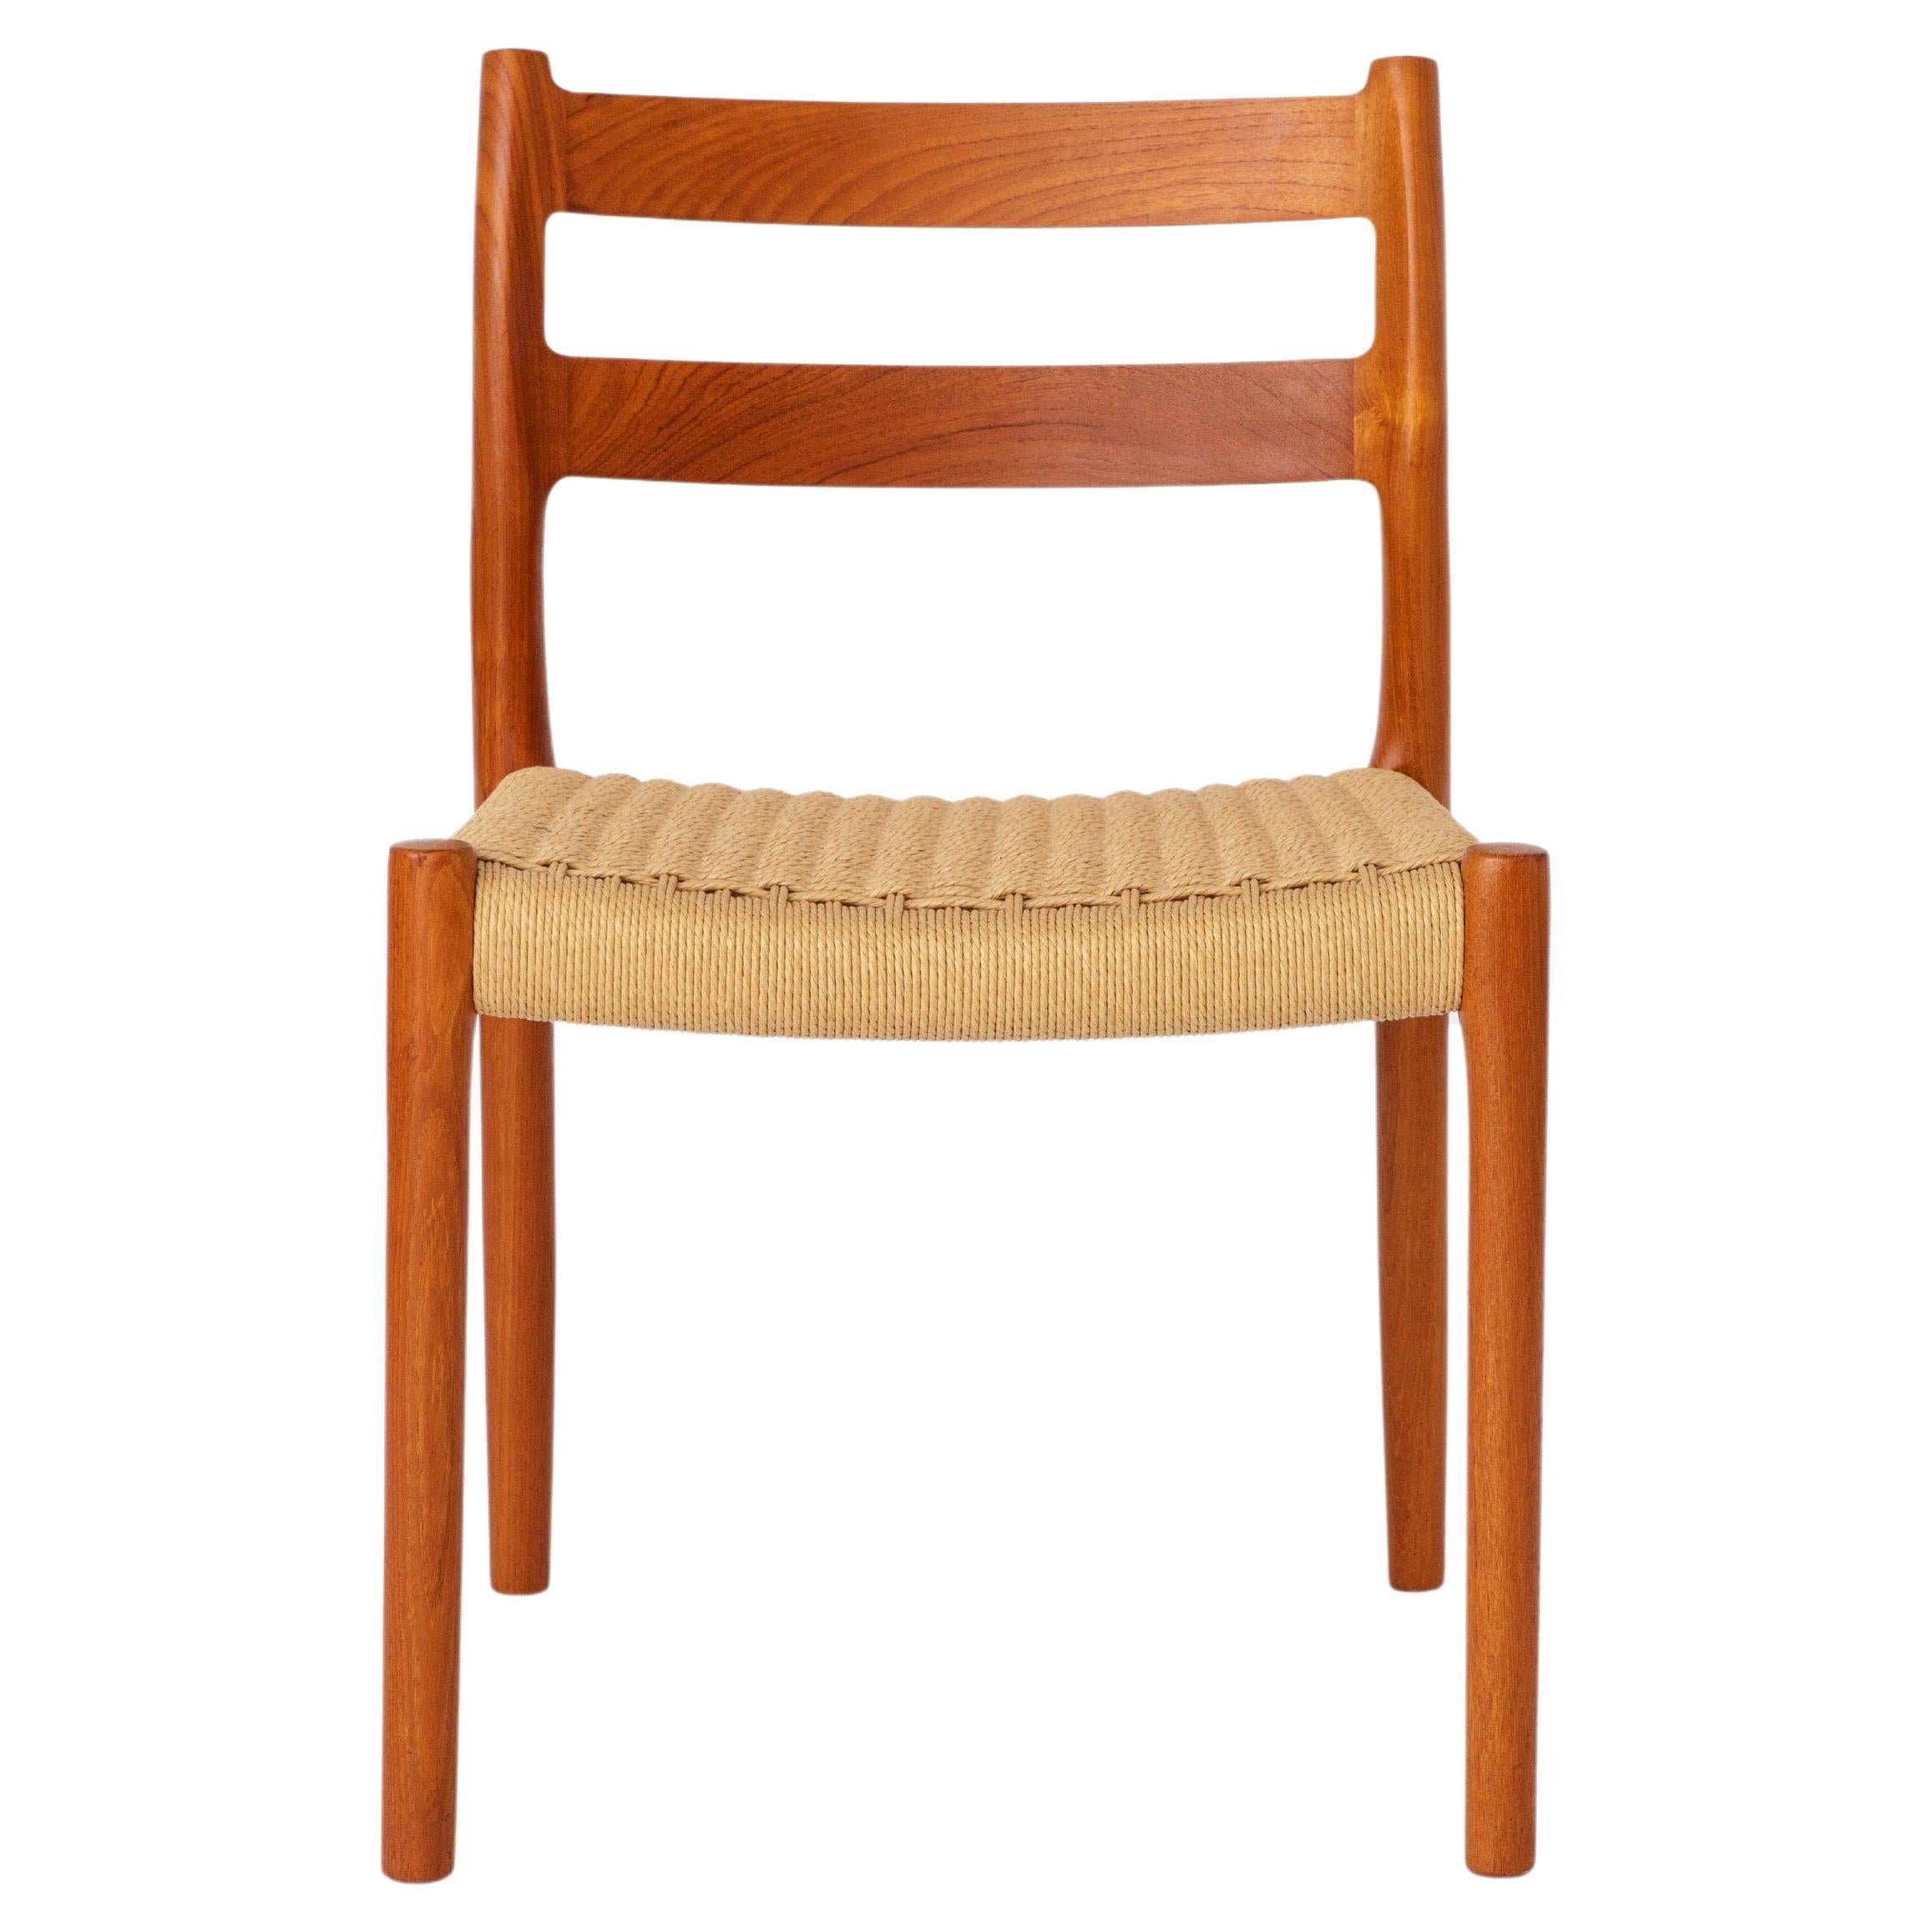 1 of 6 Niels Moller Chairs, model 84, 1970s, Teak, Vintage, Danish For Sale